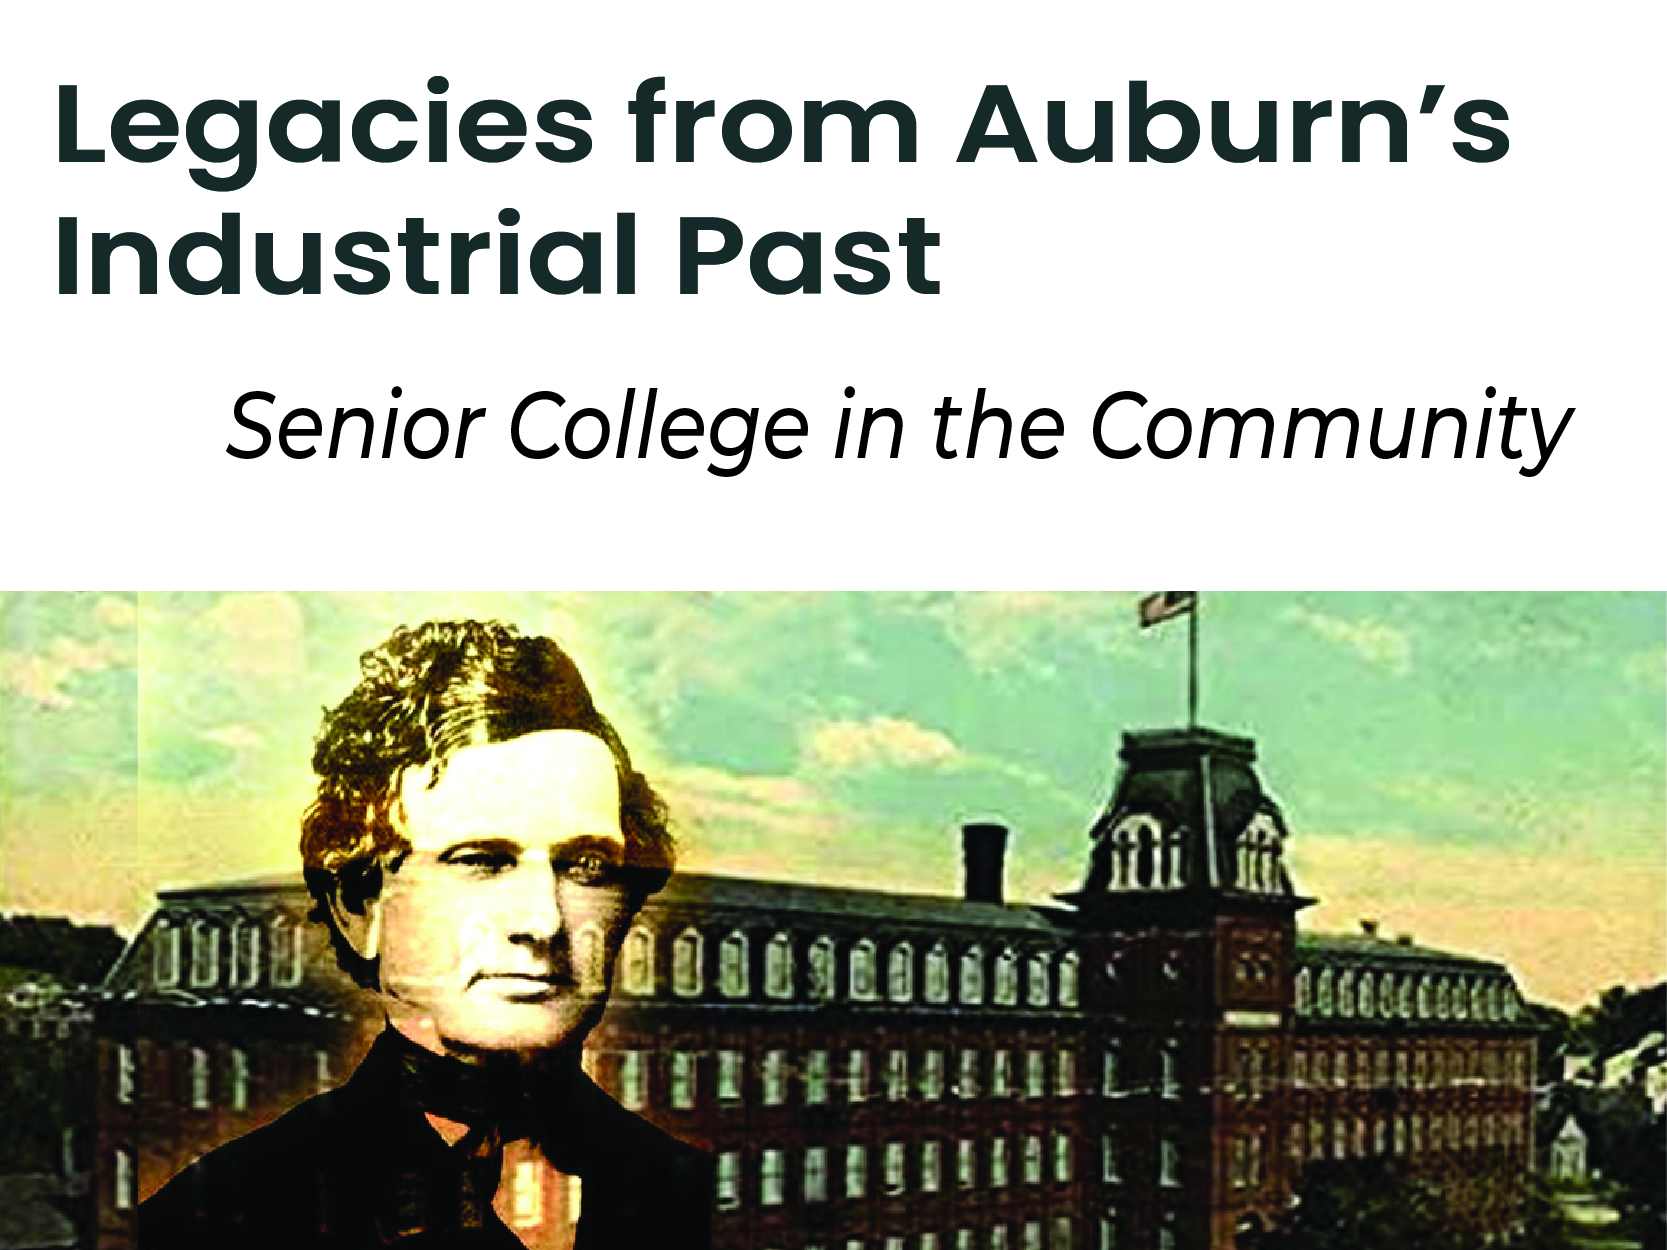 Auburn's Industrial Past Program